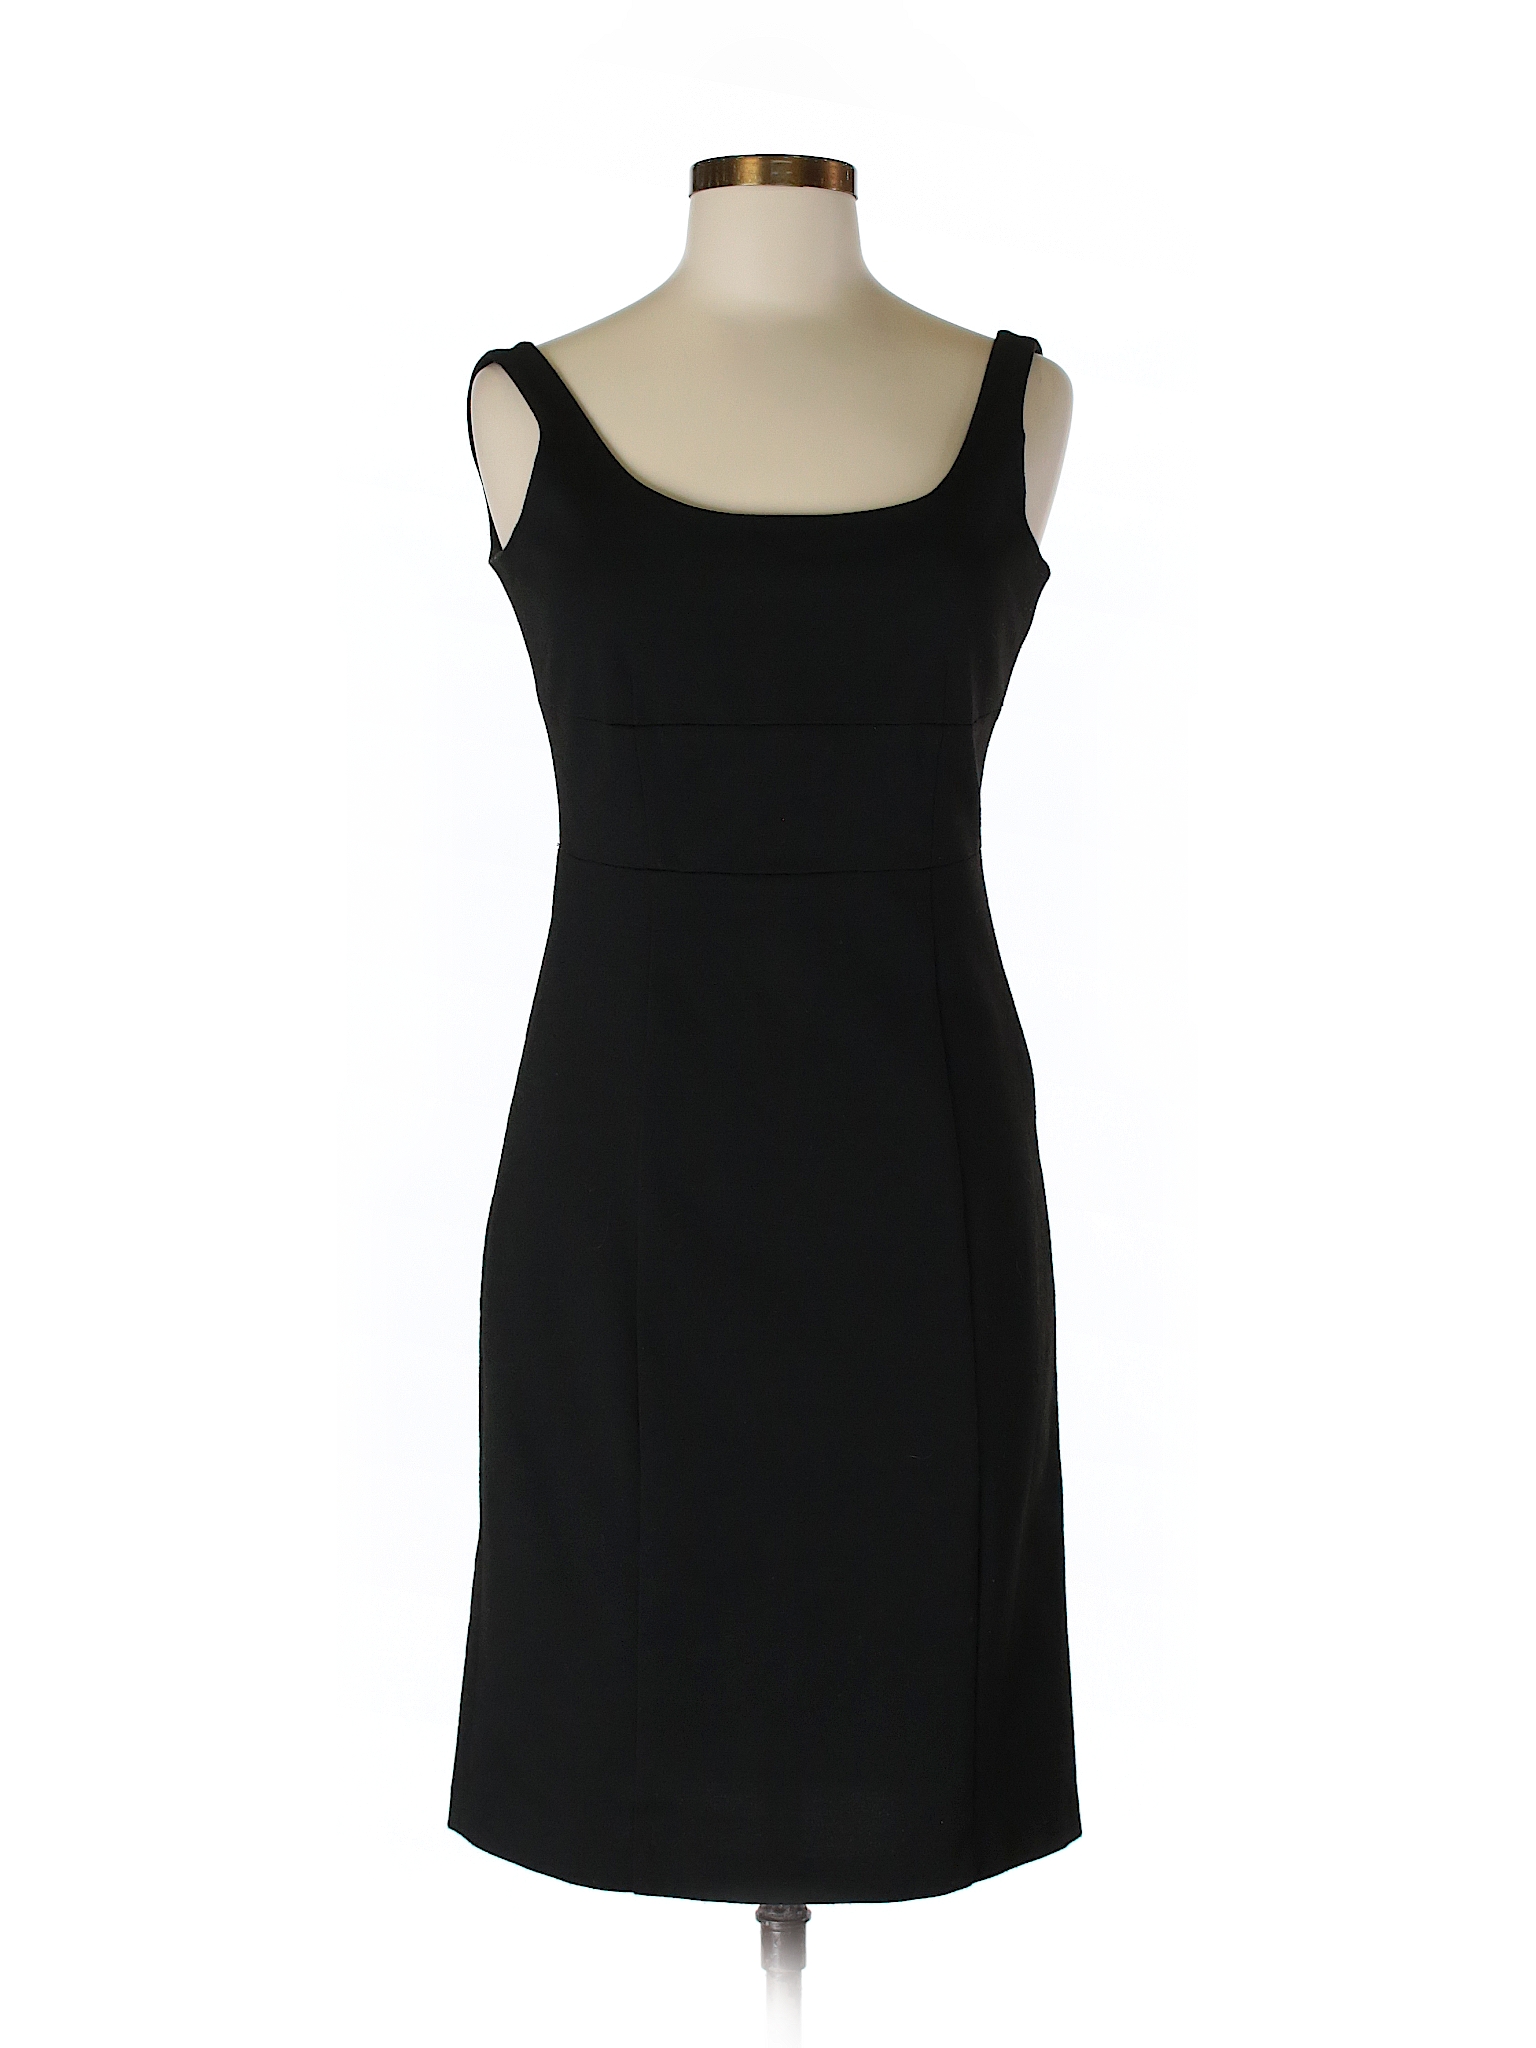 Zara Basic 100% Cotton Solid Black Casual Dress Size M - 91% off | thredUP